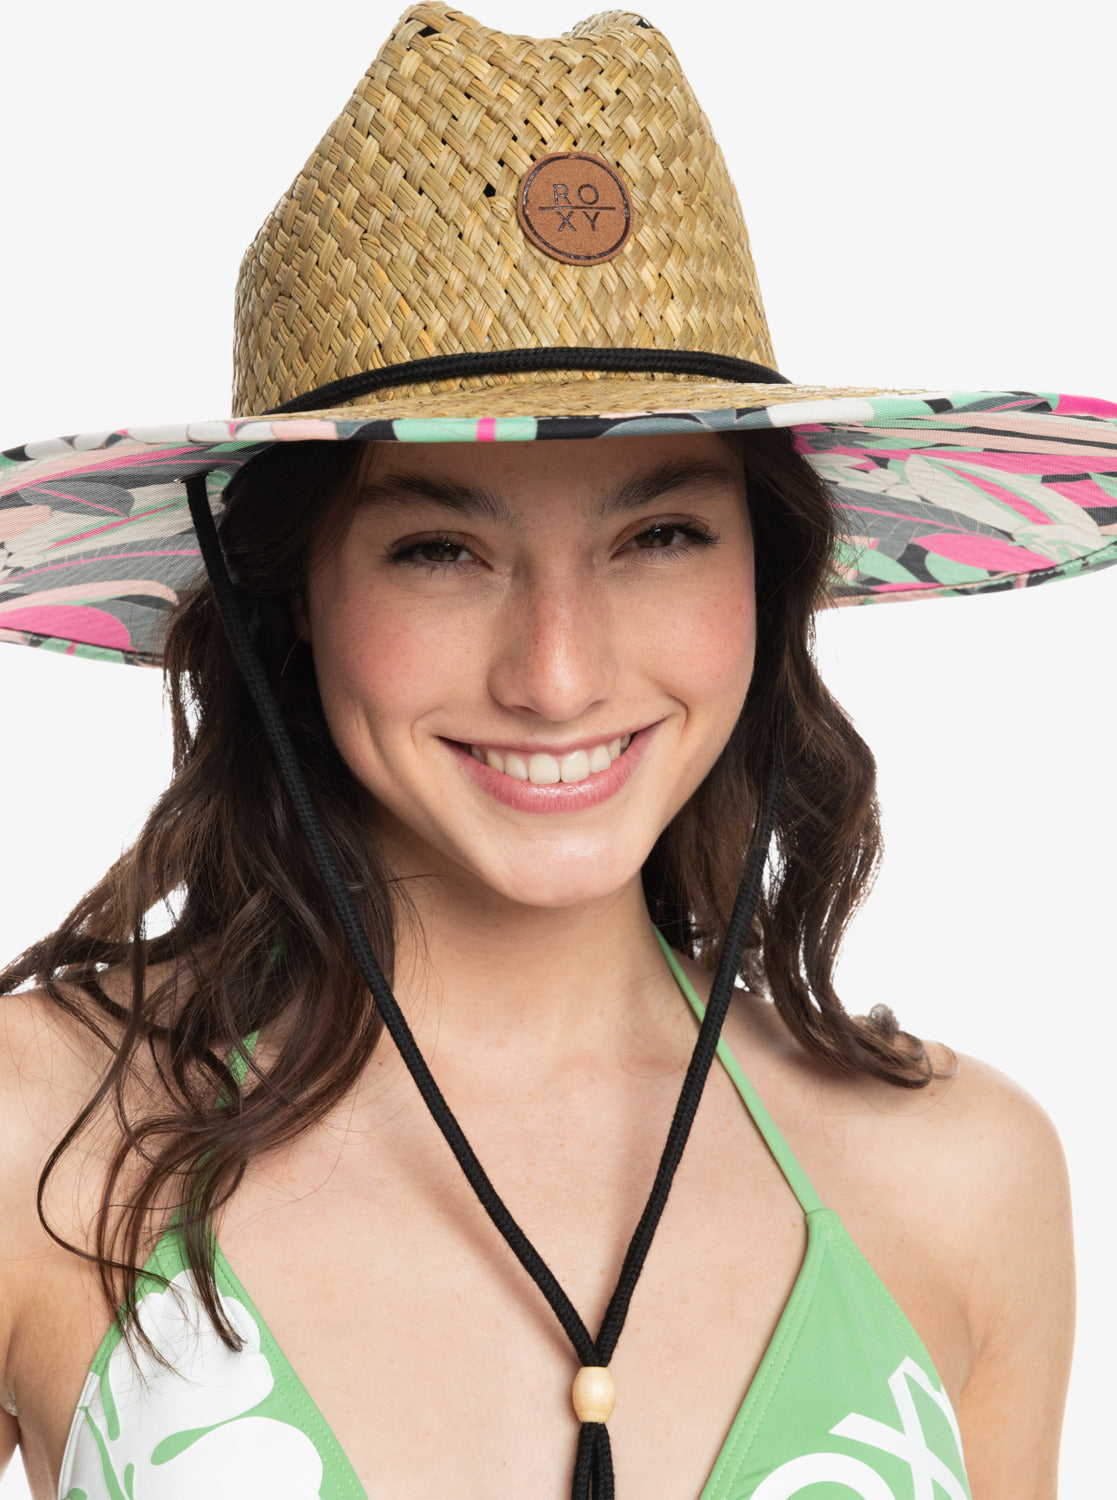  Women's Sun Hats - Pineapple&Star Hat / Women's Sun